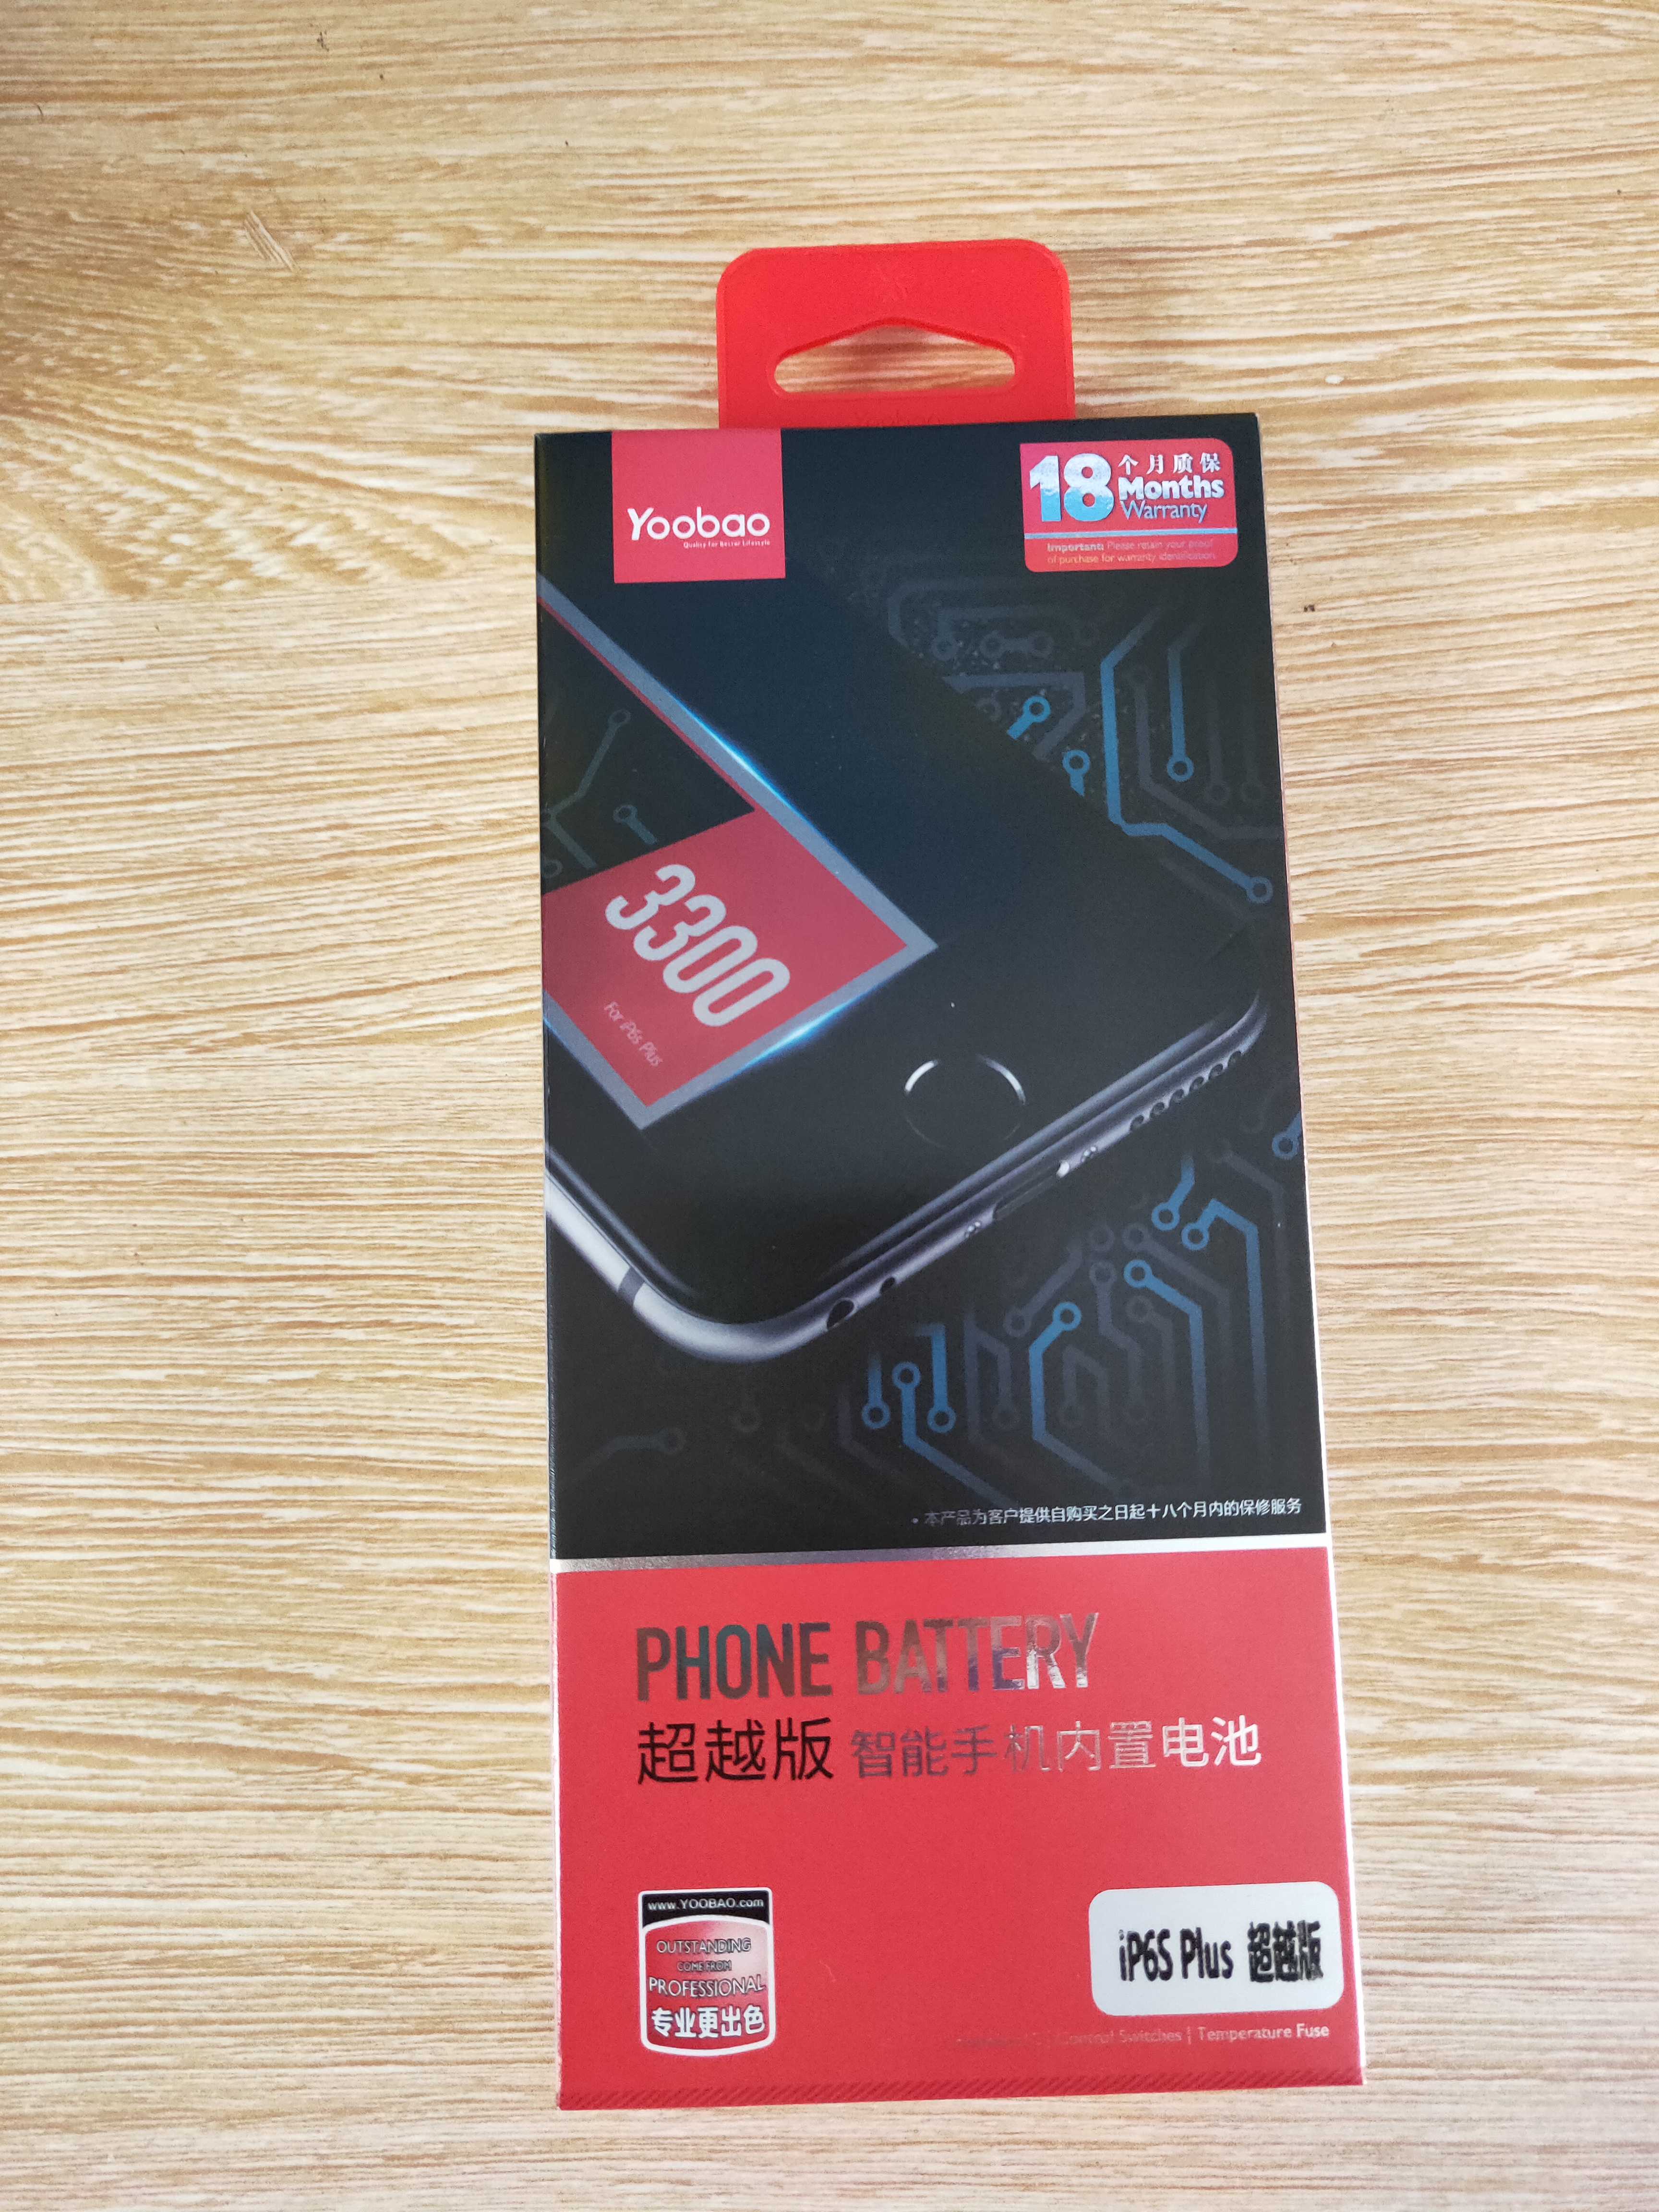 yoobao羽博 iphone6splus手机电板超越版大容量电池3300mAh